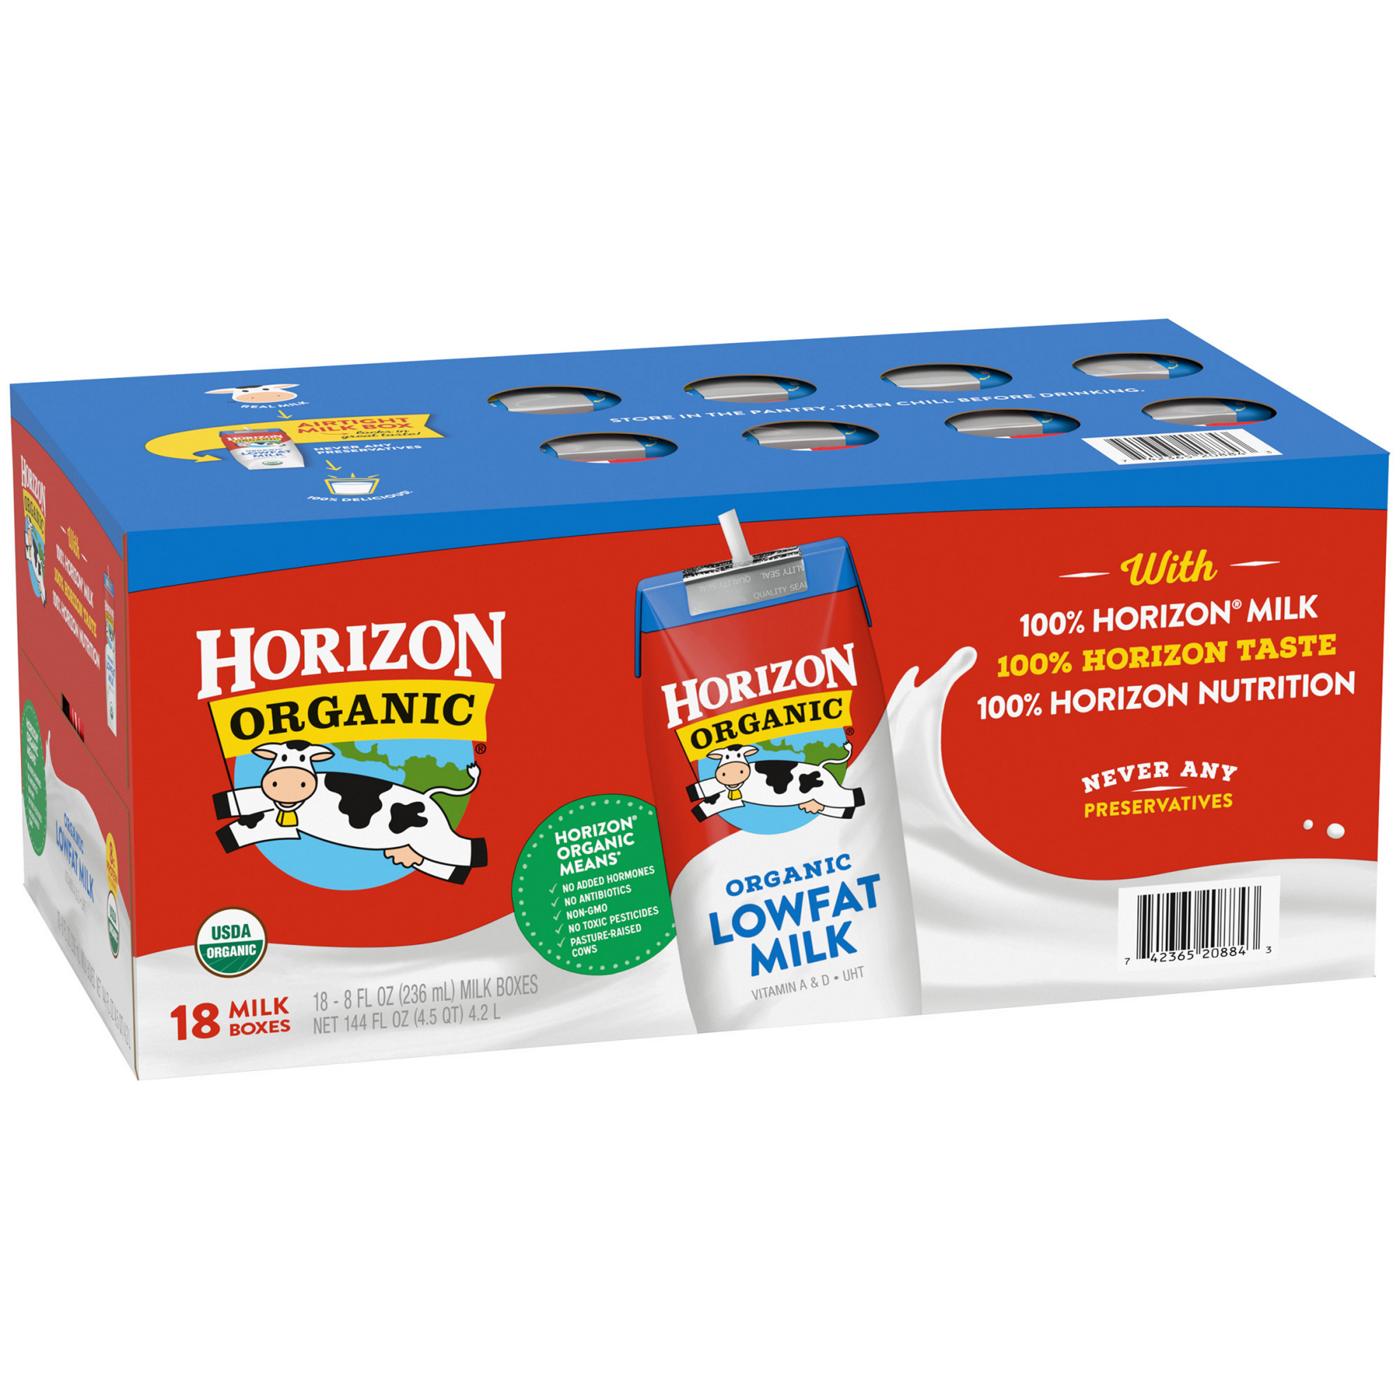 Horizon Organic 1% Lowfat Shelf-Stable Milk 8 oz Cartons; image 1 of 8